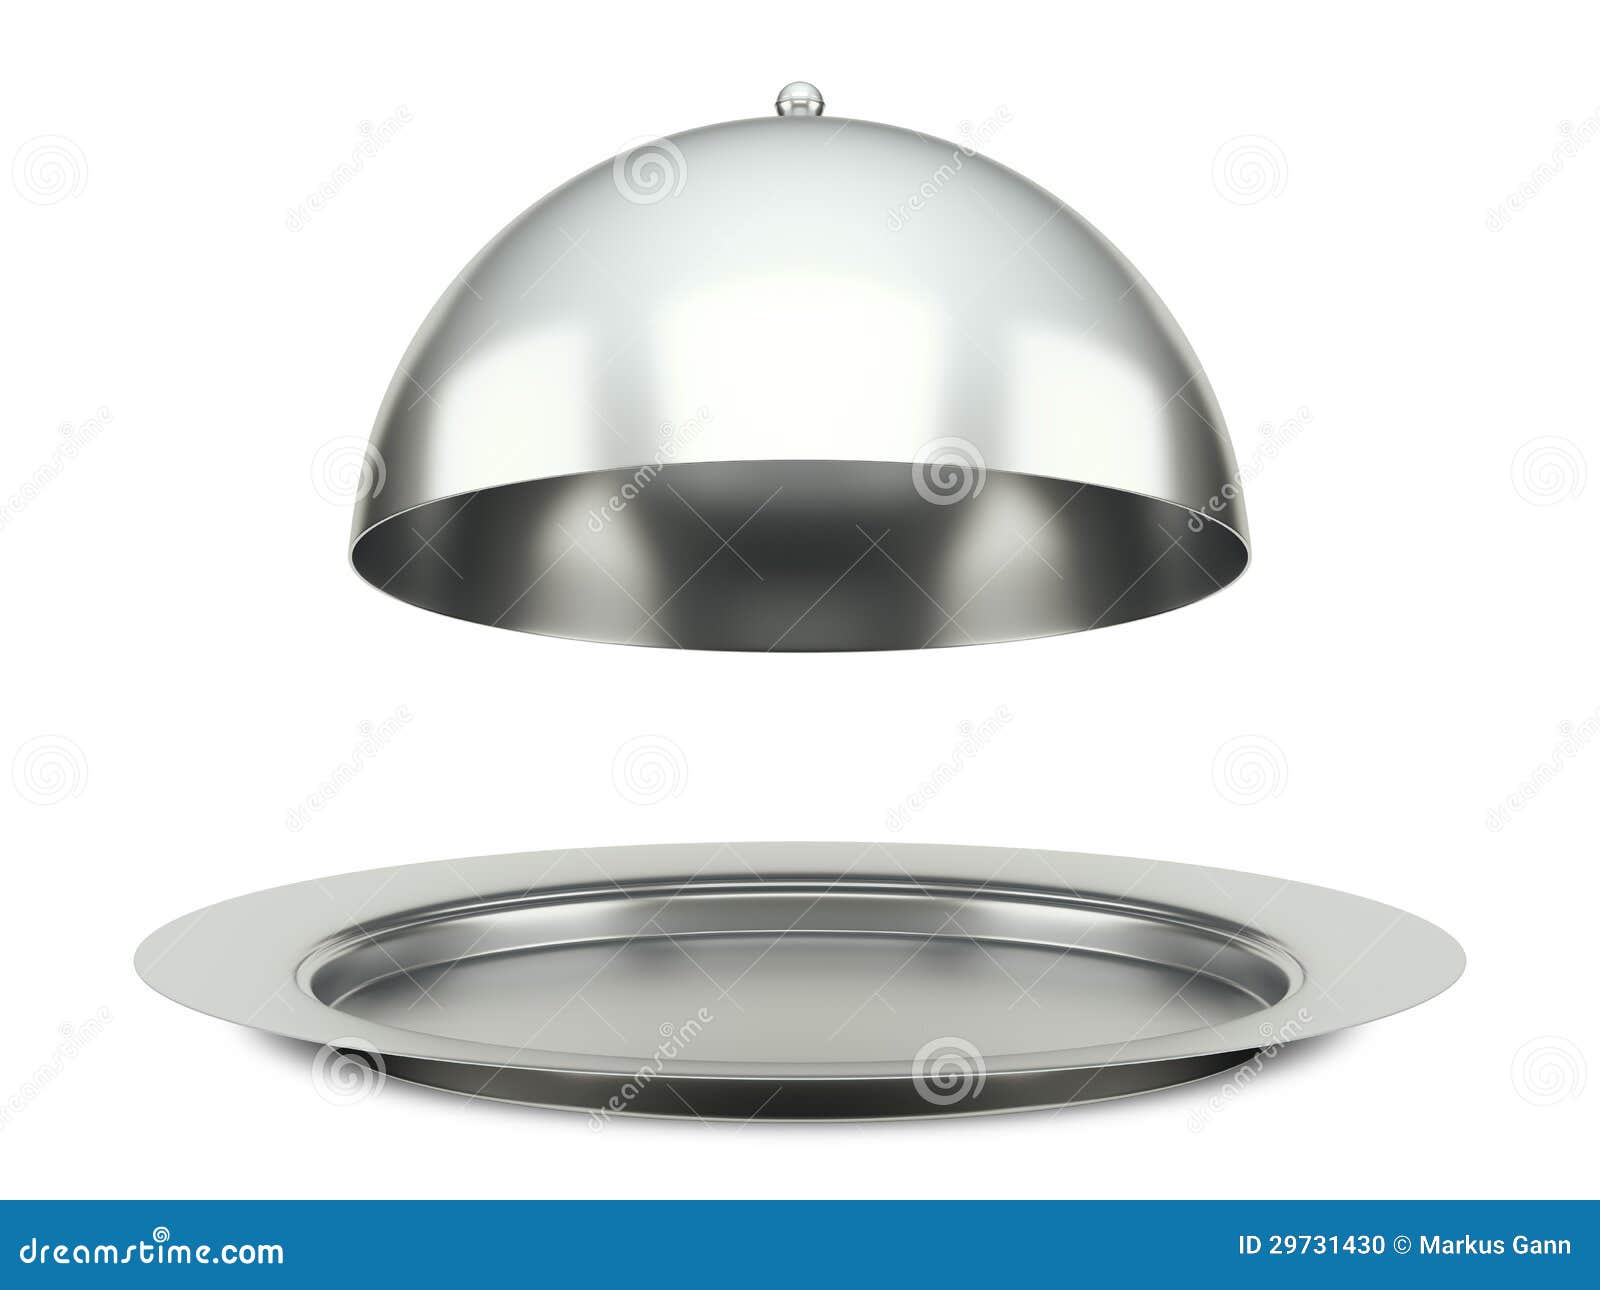 dining silver cloche platter